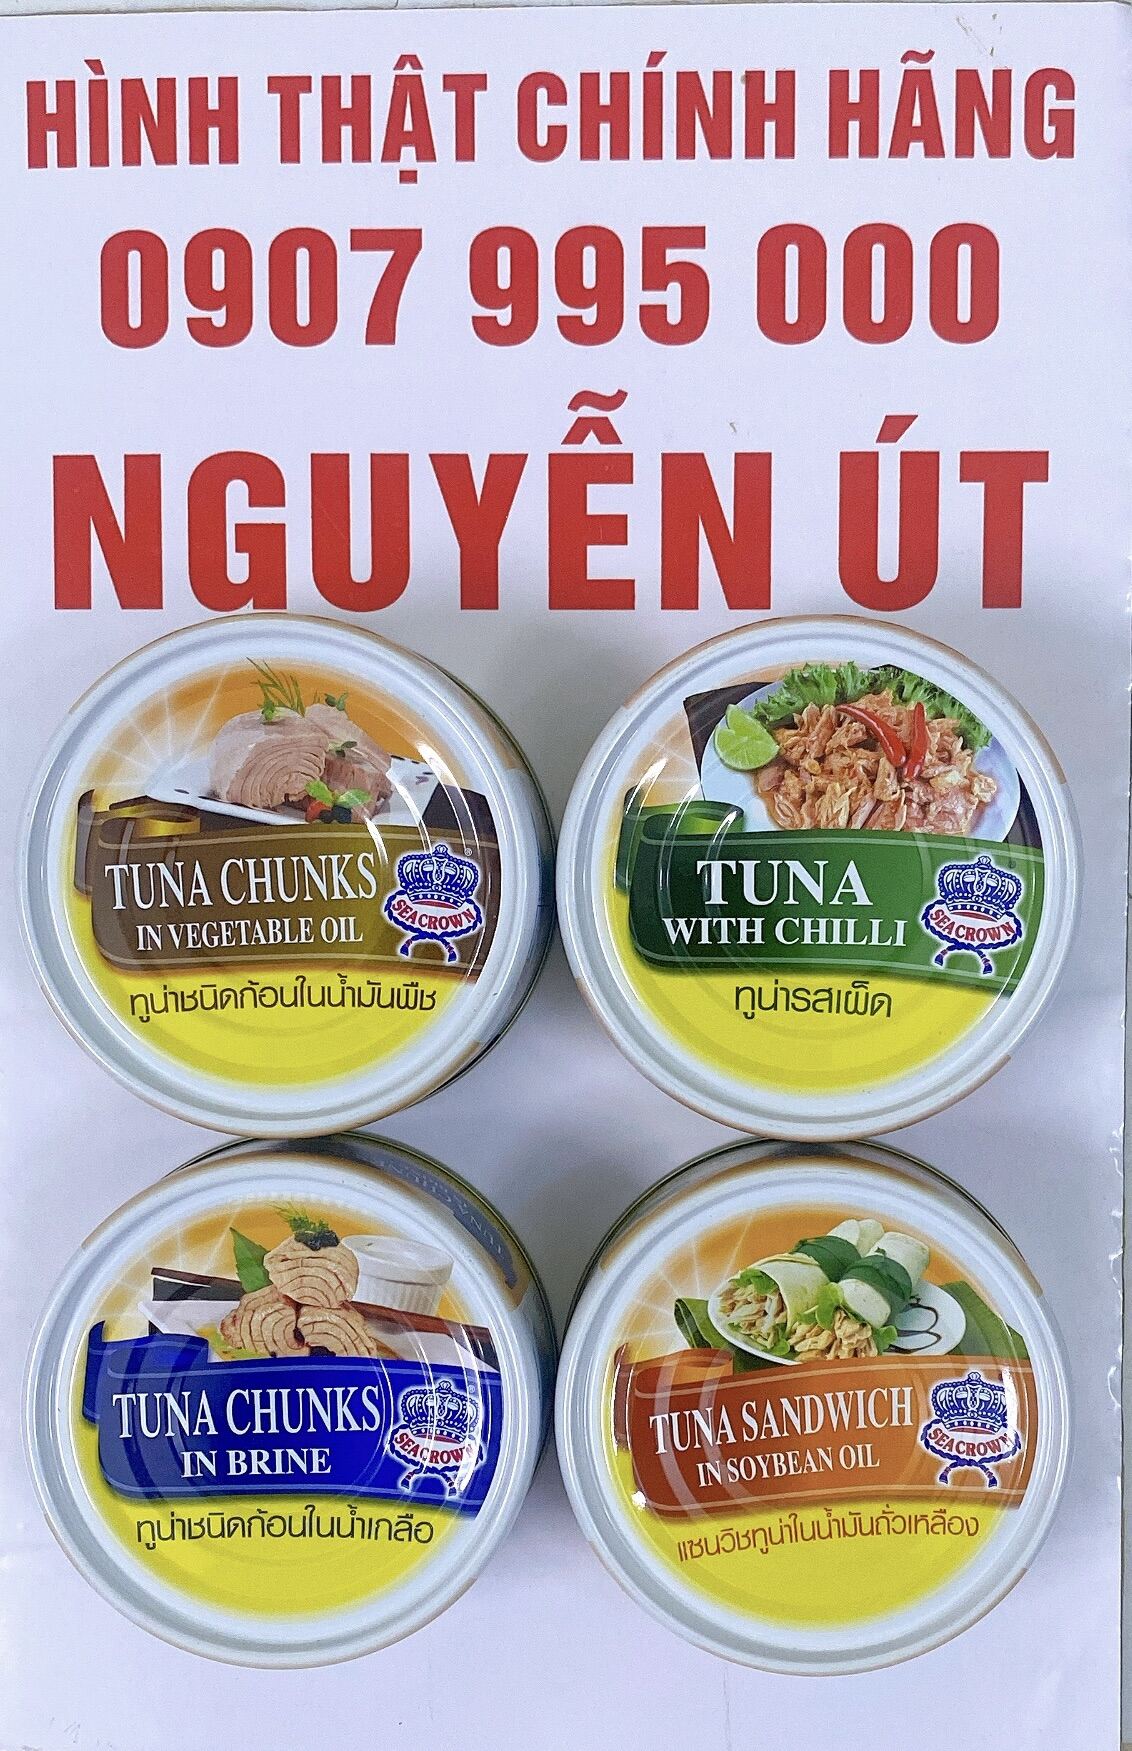 [HCM]cá ngừ tuna sea crown 140g